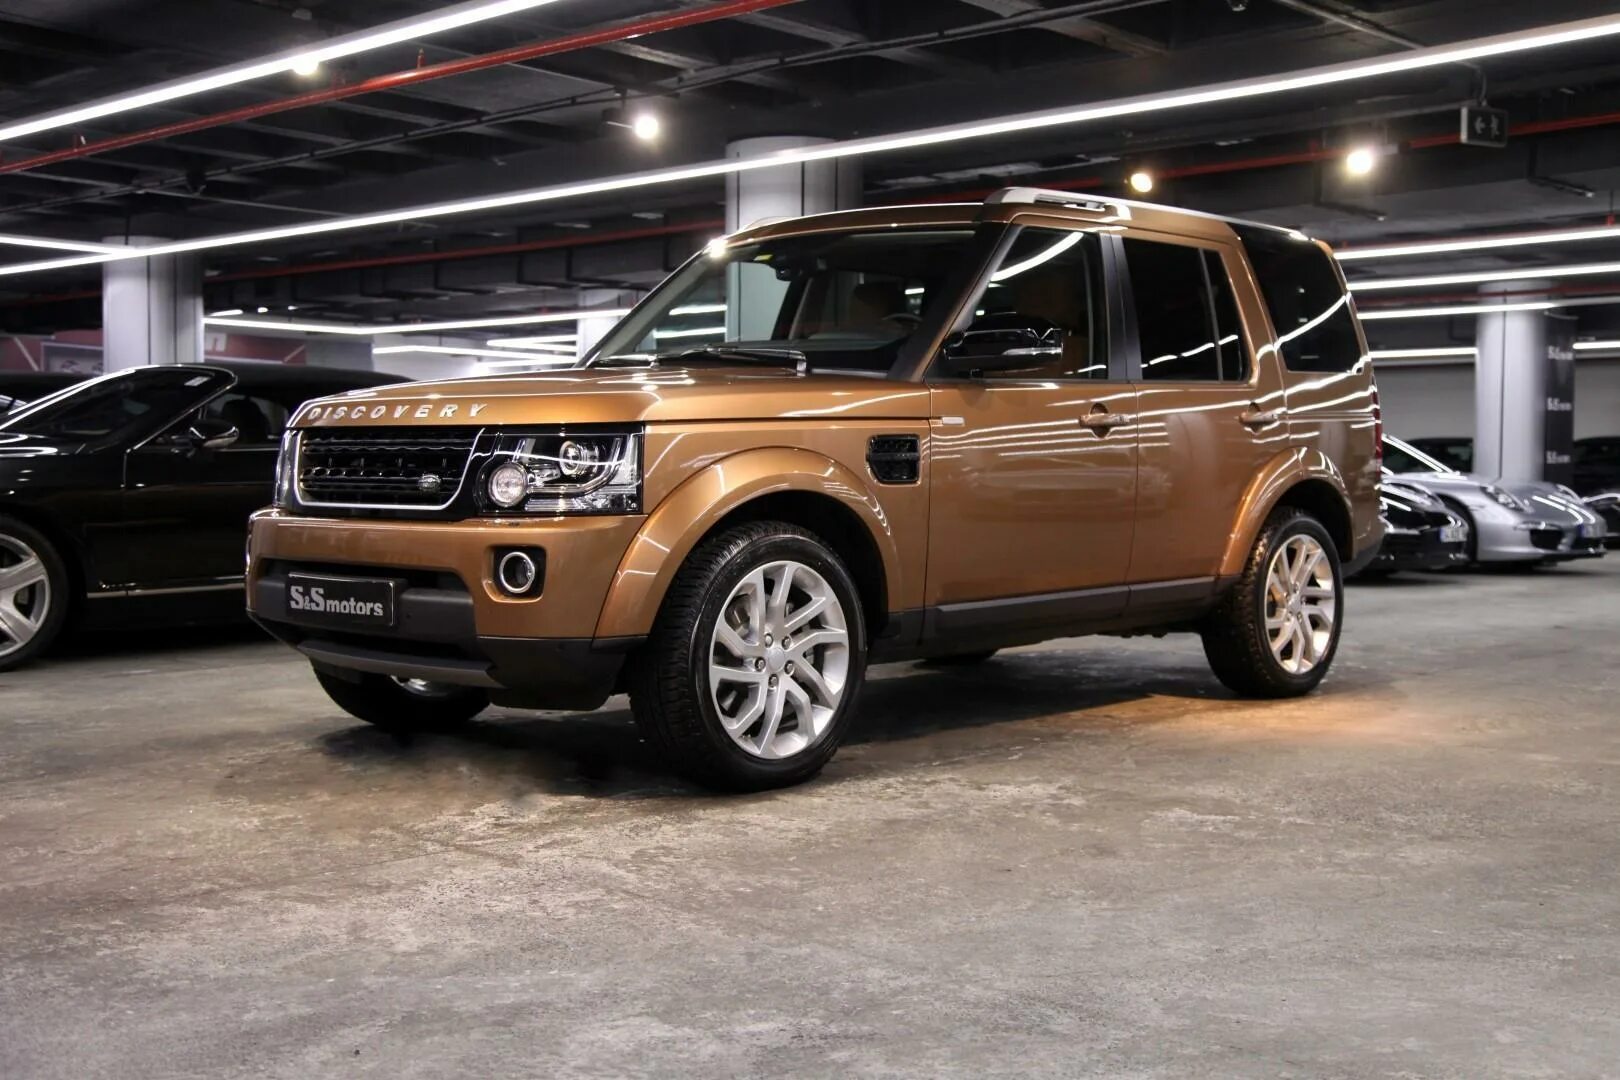 Купить ленд ровер цены. Land Rover Discovery 4. Land Rover Discovery 4 landmark. Land Rover Discovery 3 2016. Ленд Ровер Дискавери 4 2016.